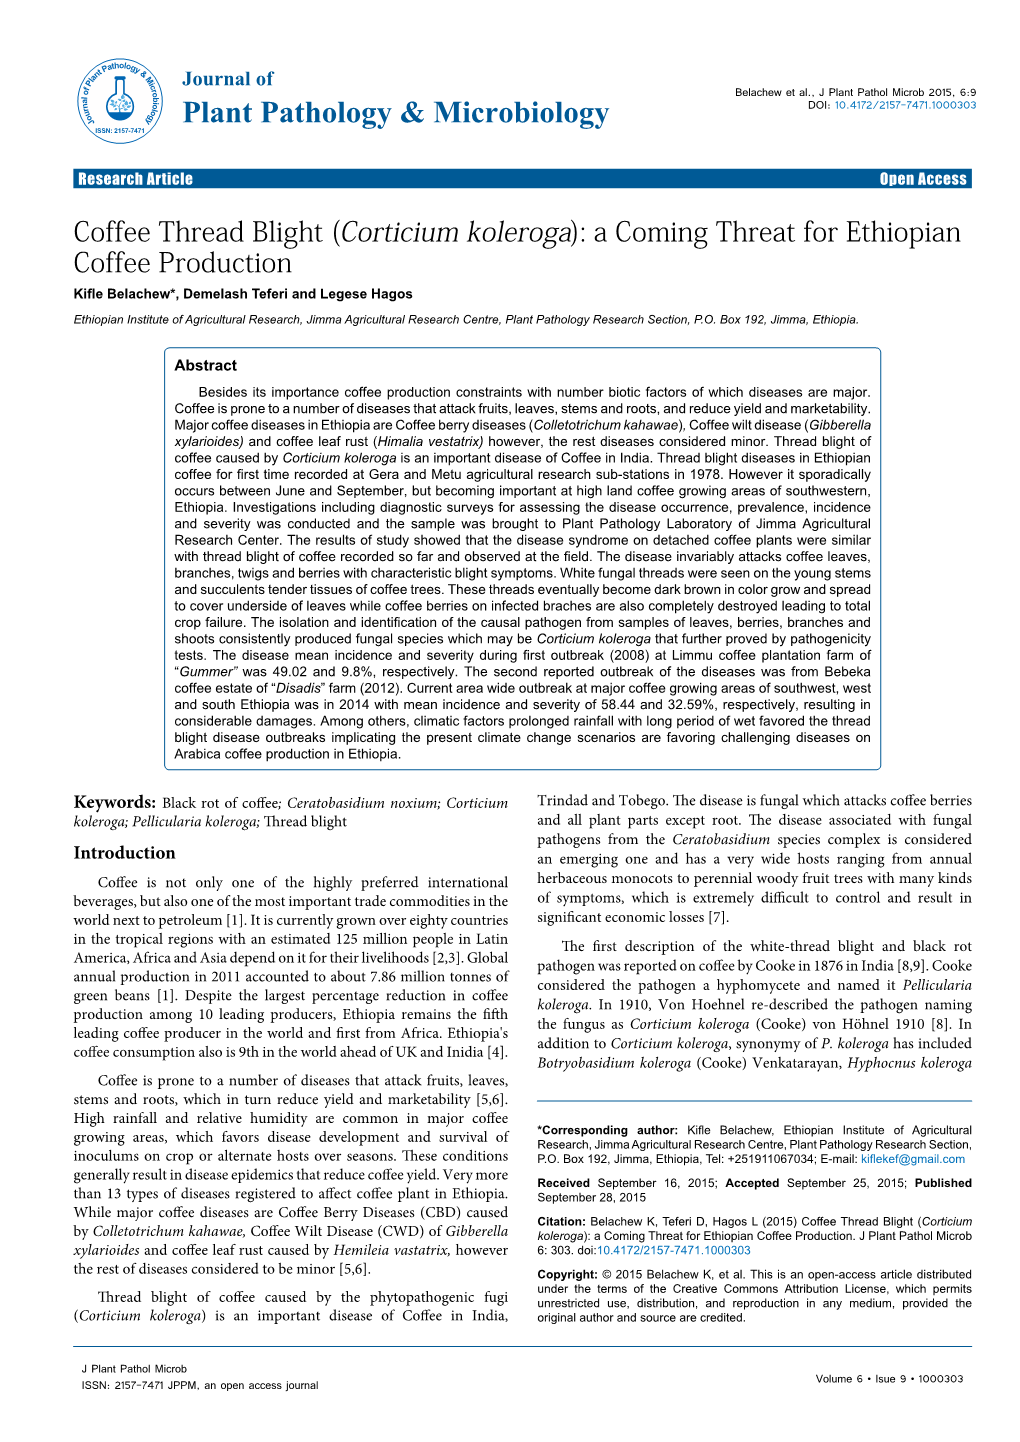 Coffee Thread Blight (Corticium Koleroga)